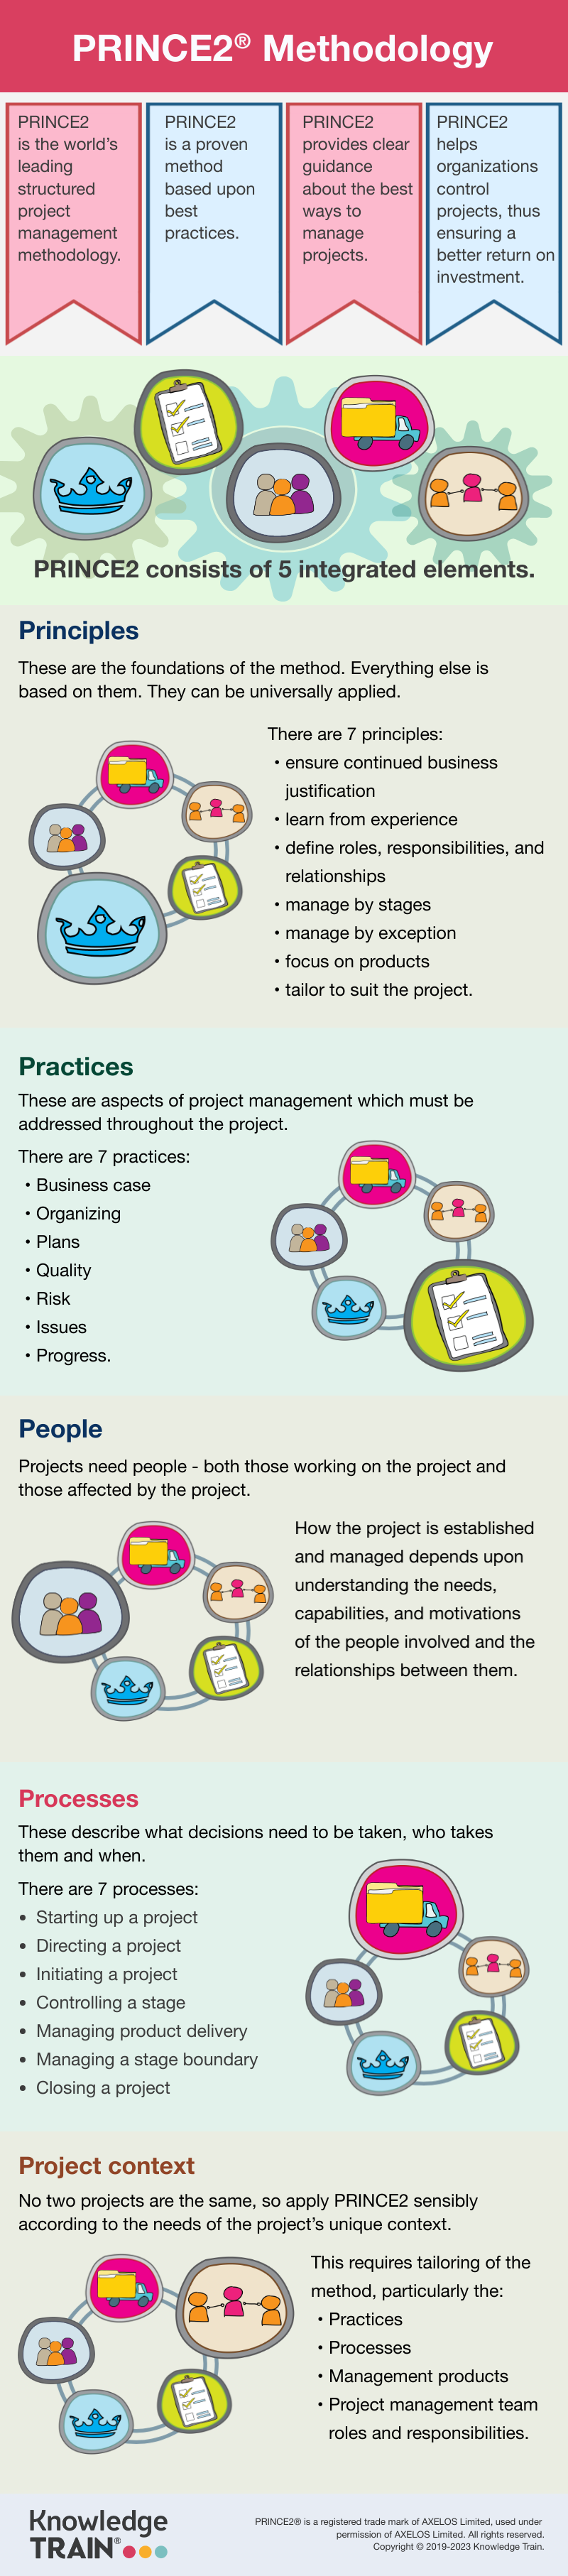 PRINCE 2 methodology infographic